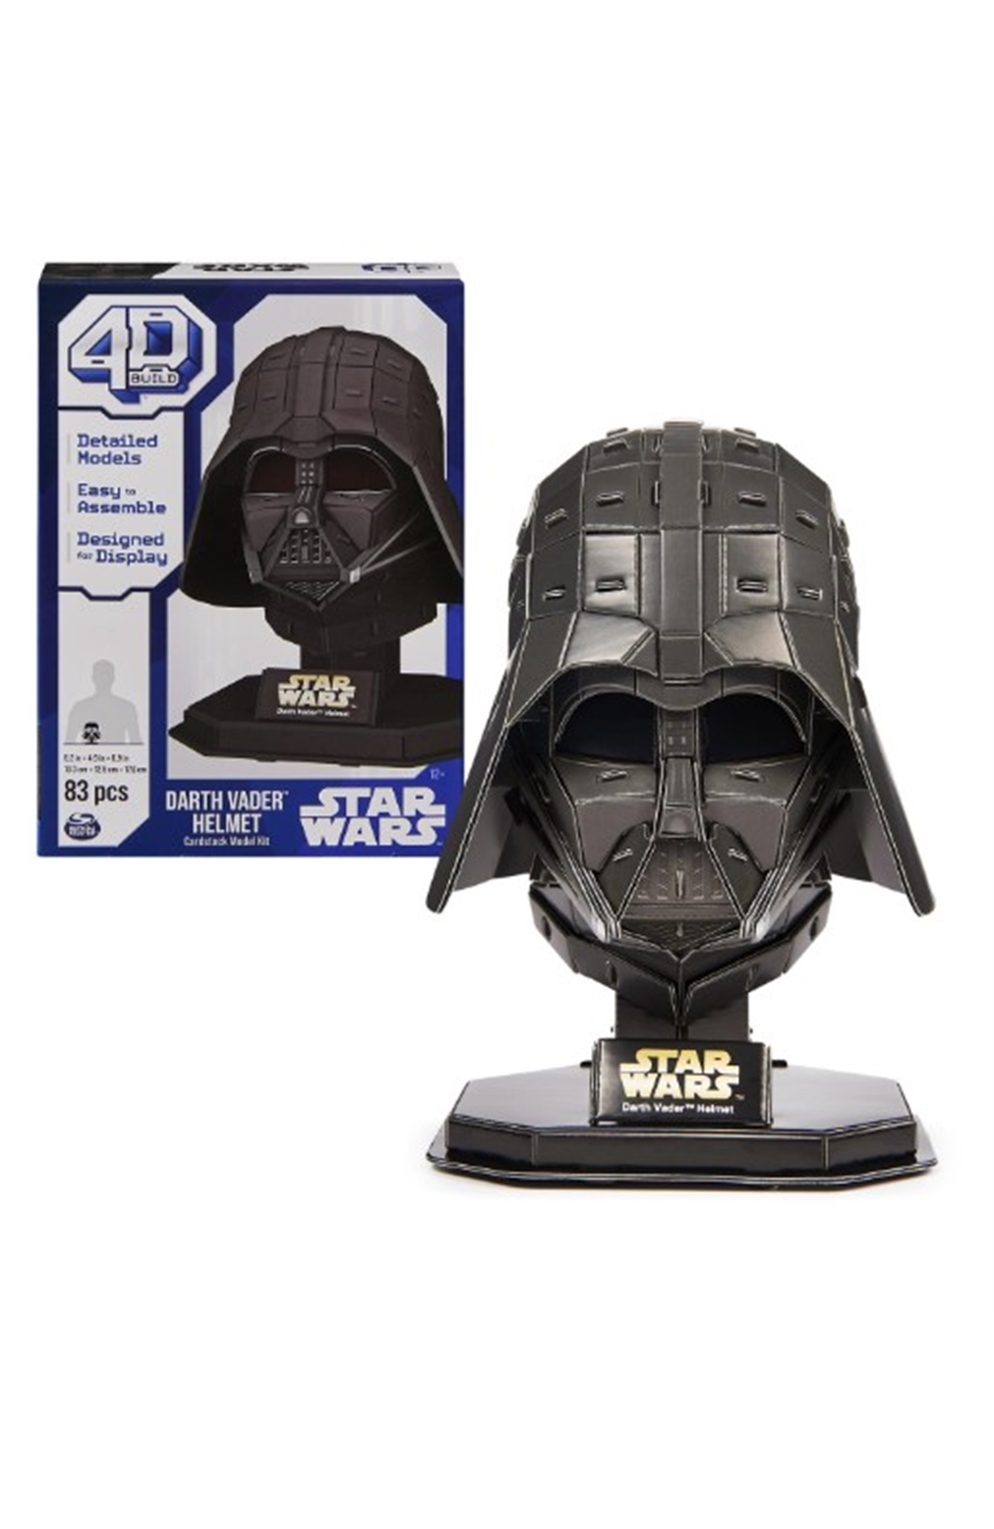 4D Build, Star Wars Darth Vader 3D Cardstock Model Kit